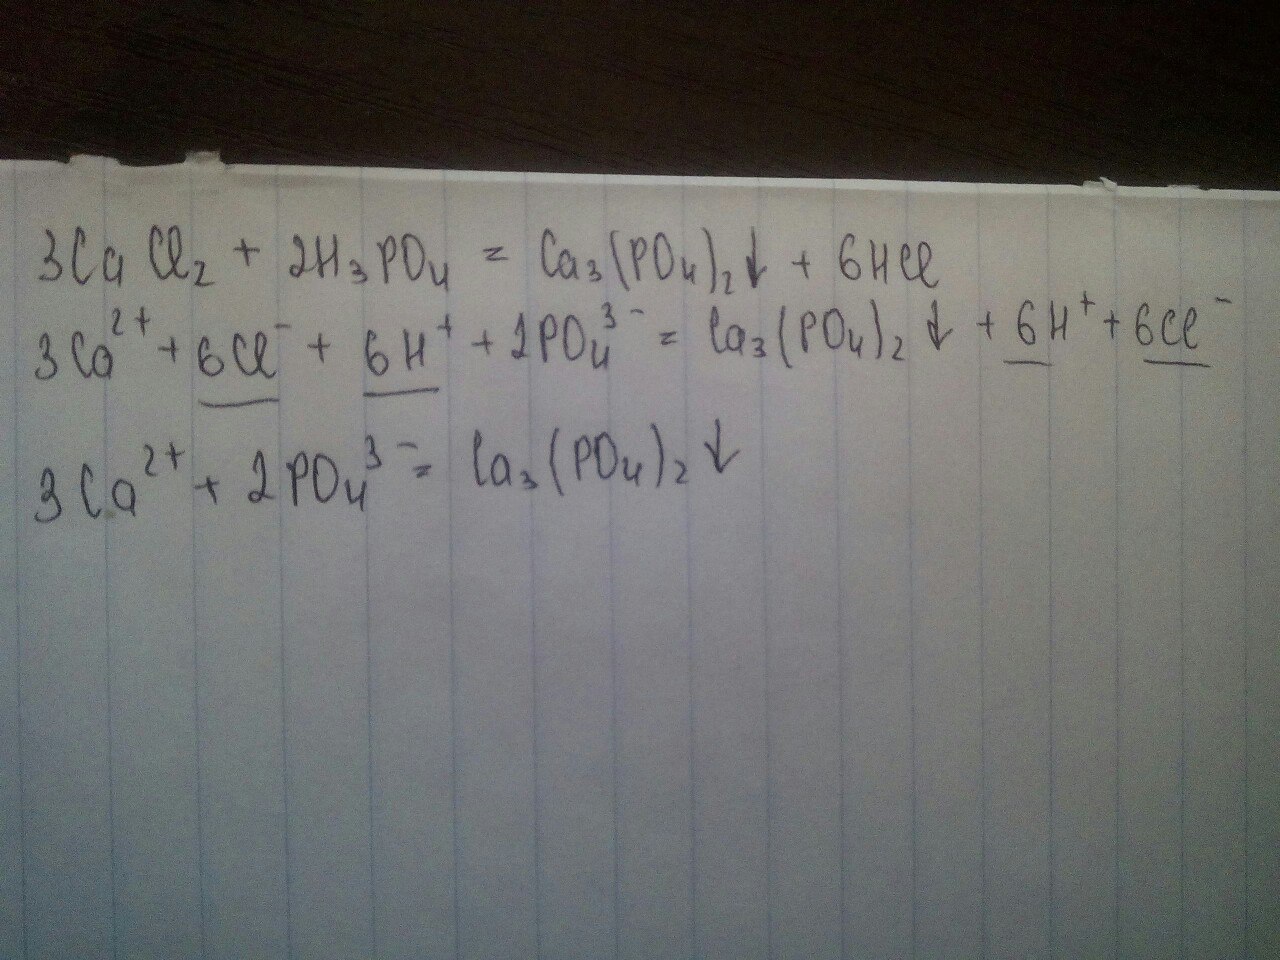 Cucl2 k3po4. H3po4+cacl2. Cacl2 h3po4 ионное уравнение полное. Cacl2+h3po4 ионное уравнение. H3po4 cacl2 уравнение.